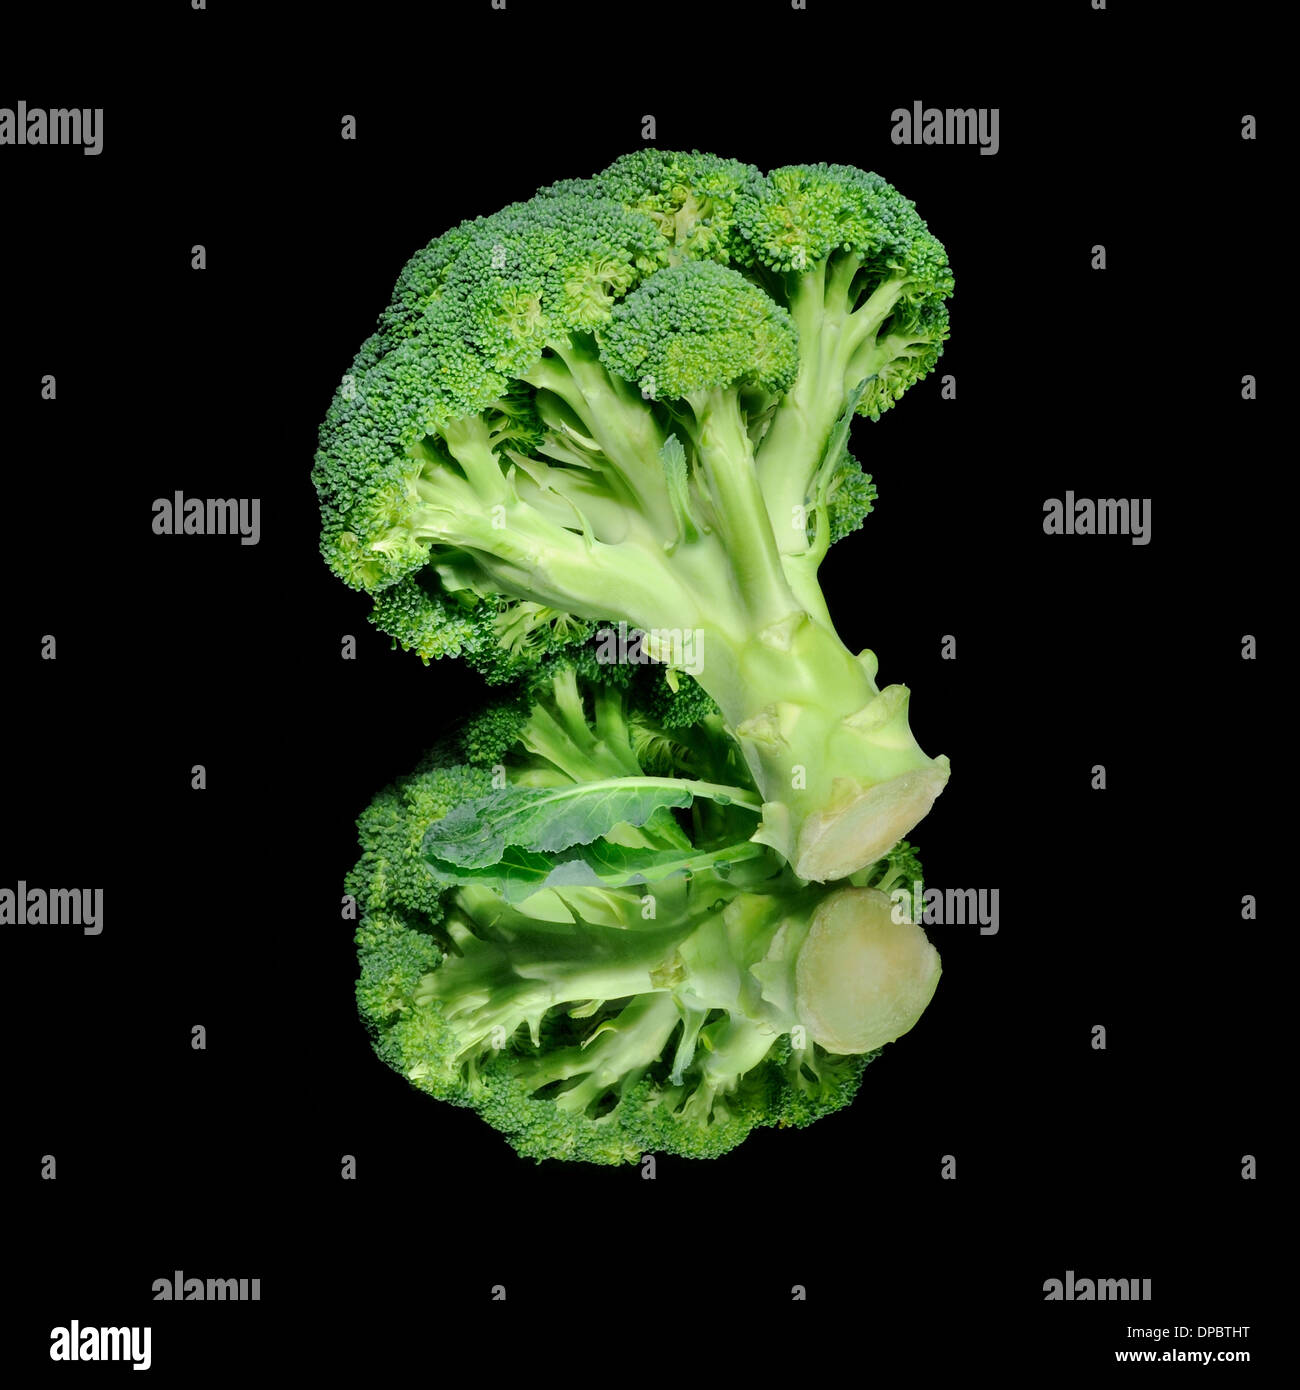 Broccoli on mirror with black background, Stock Photo